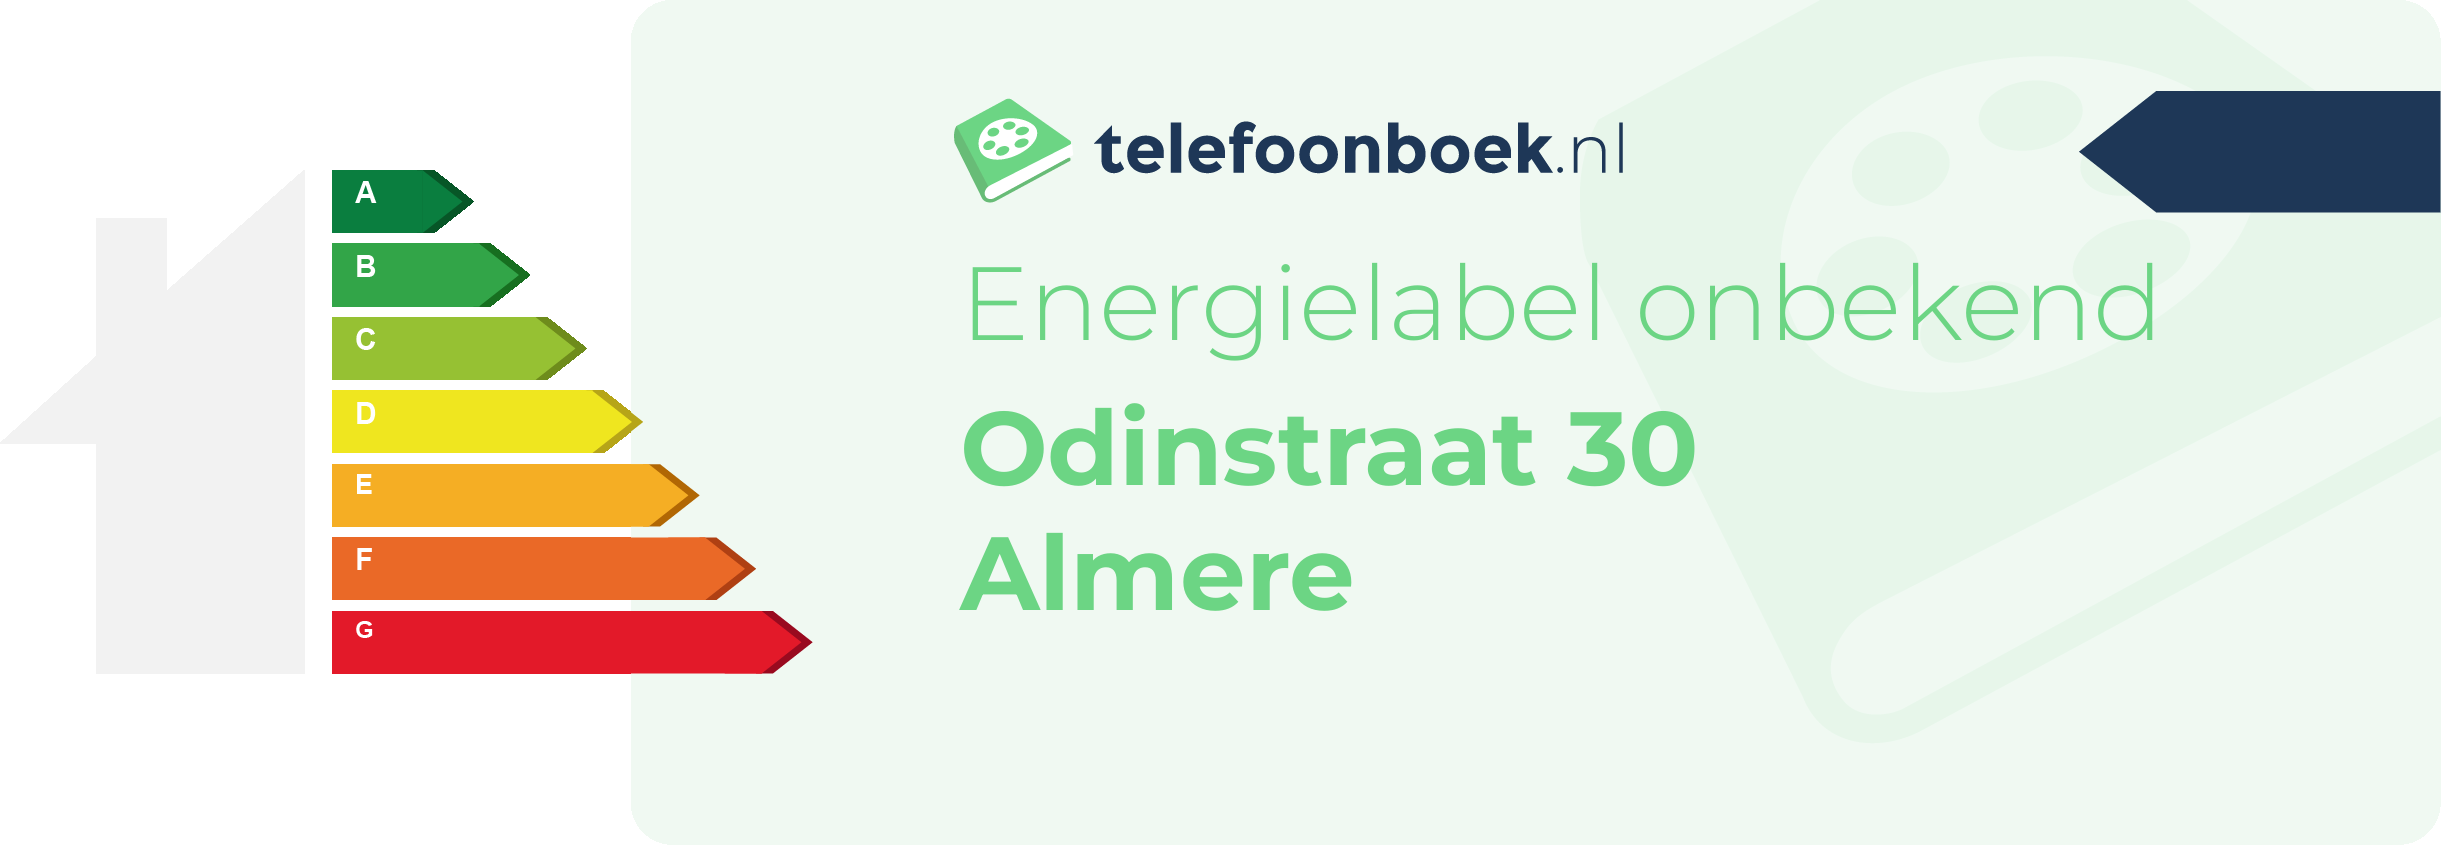 Energielabel Odinstraat 30 Almere